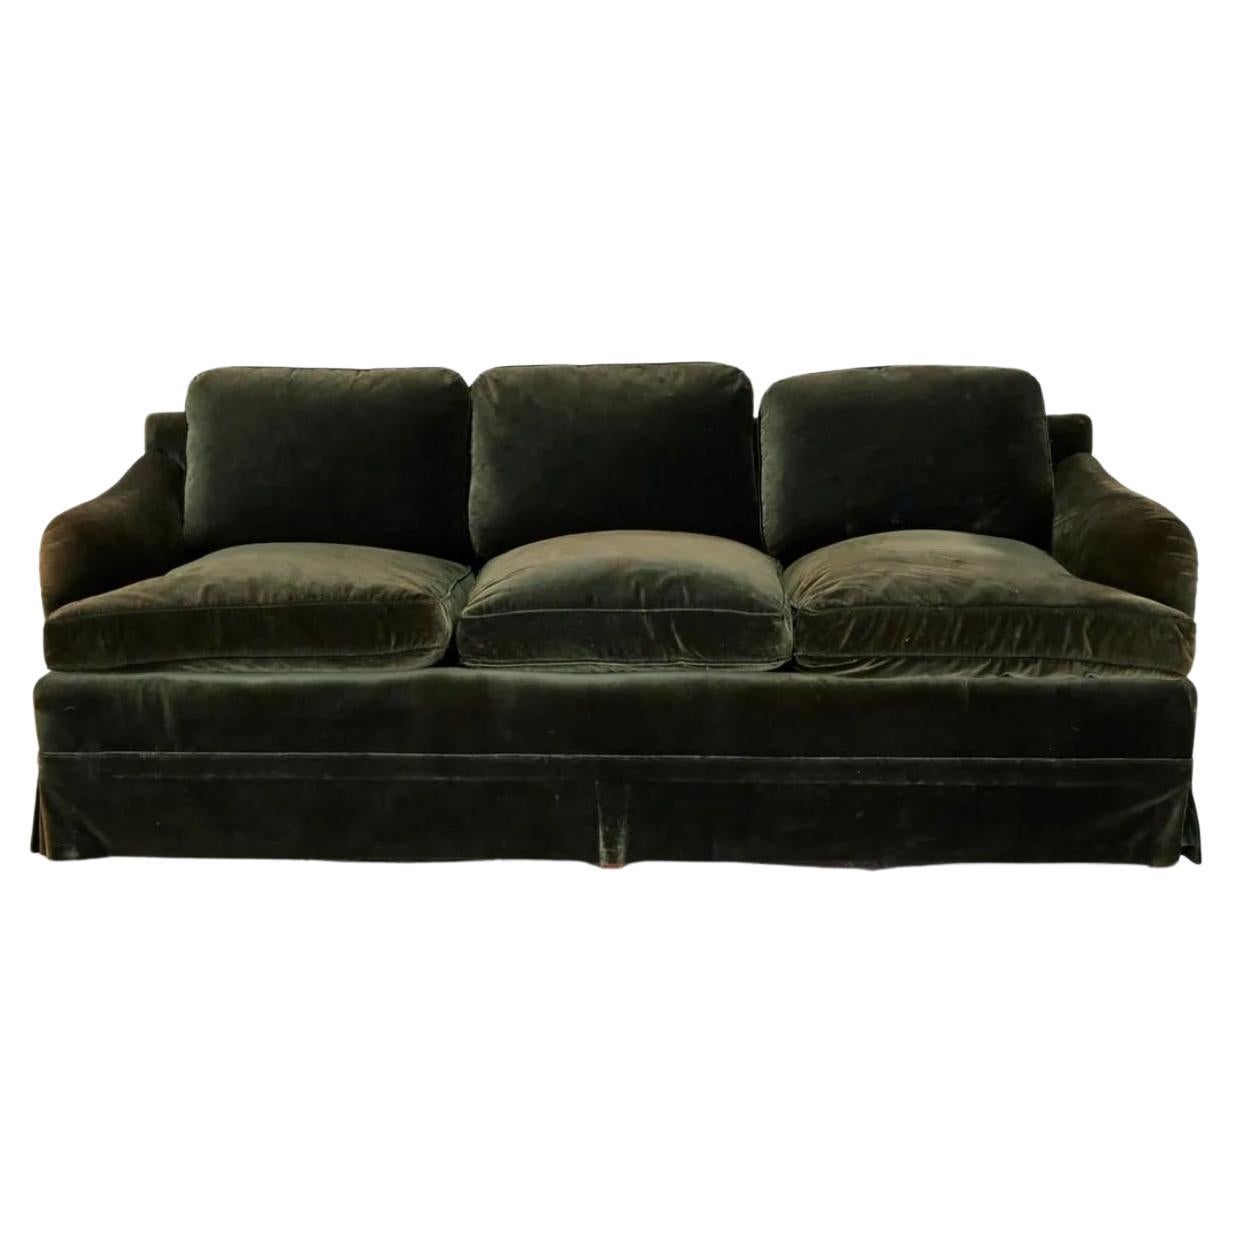 20th Century English Moss Green Velvet Upholstered 3-Seat Saddle Arm Sofa For Sale